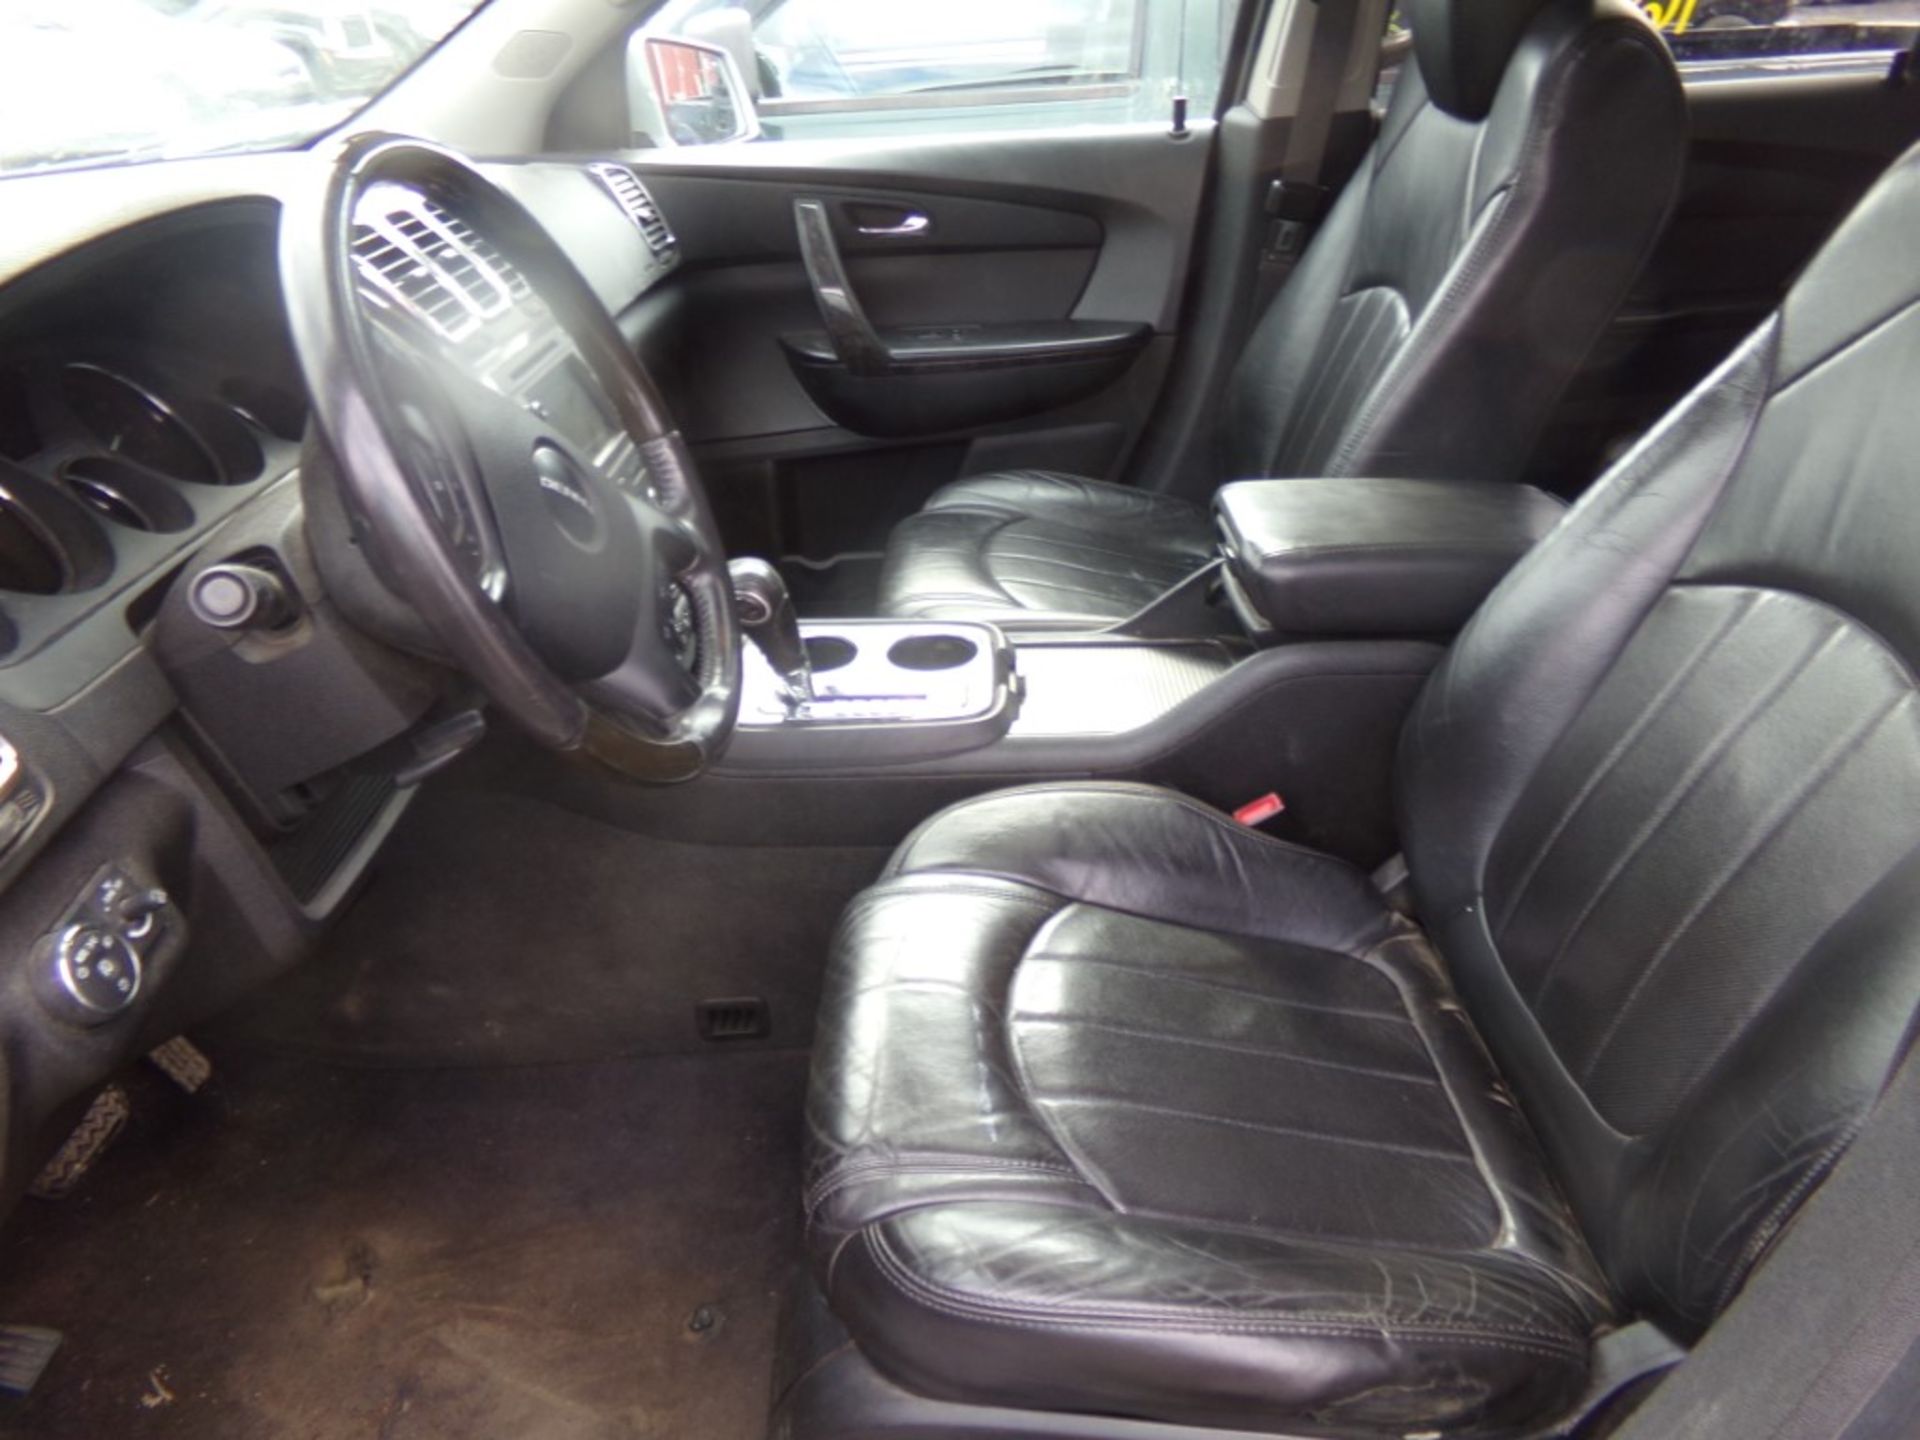 2012 GMC Acadia Denali, Auto, Leather, Sunroof, Navigation, AWD, 3rd Row Seating, Back-Up Camera, - Image 5 of 8